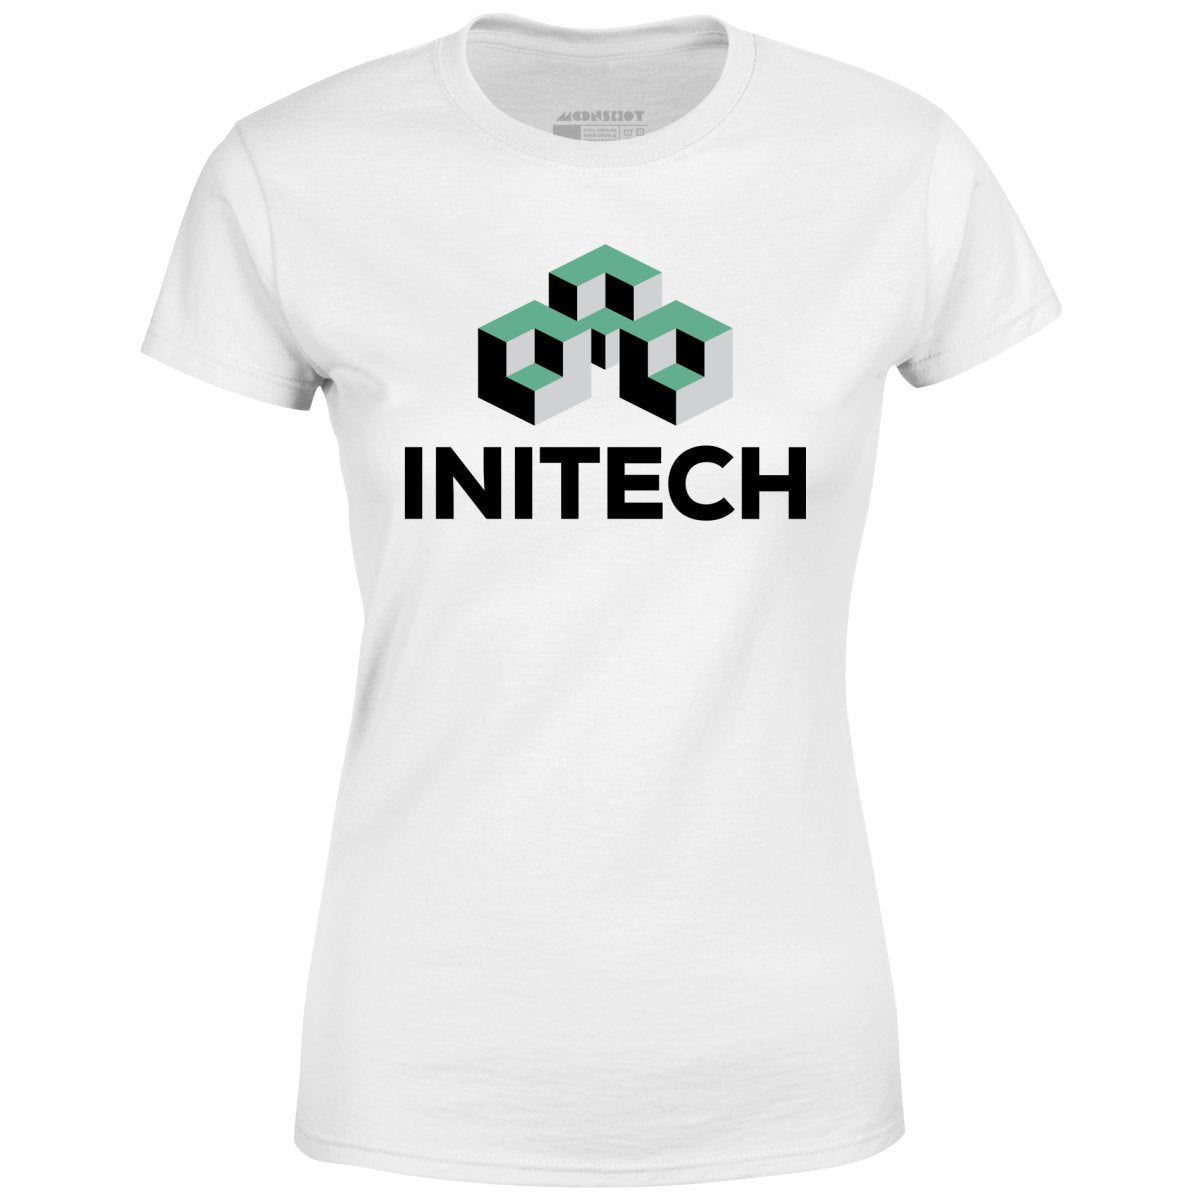 Initech Office Space - Women's T-Shirt